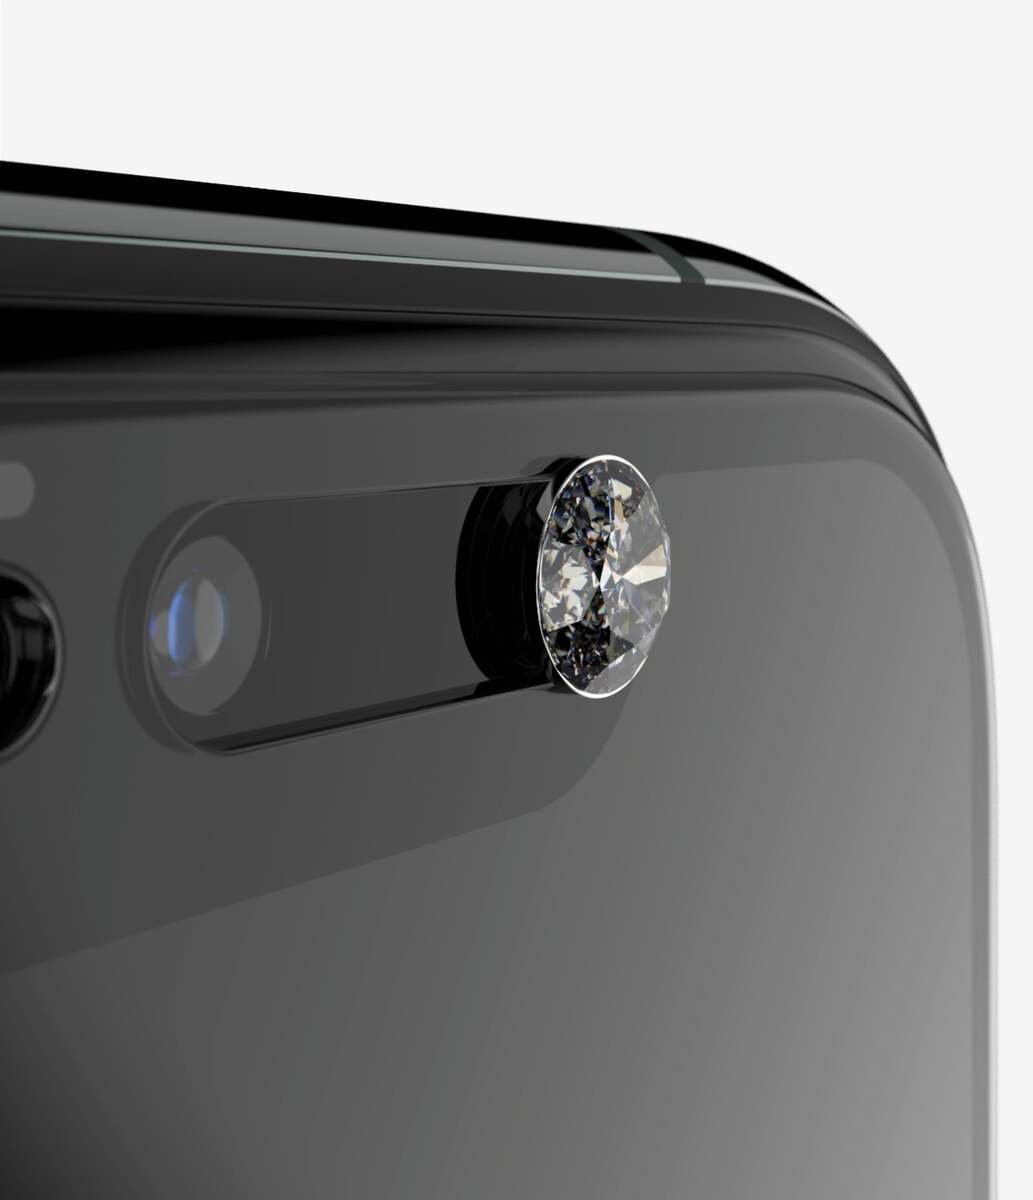 PANZERGLASS Swarovski CamSlider Privacy Screen Protector for iPhone 11 Pro - Black